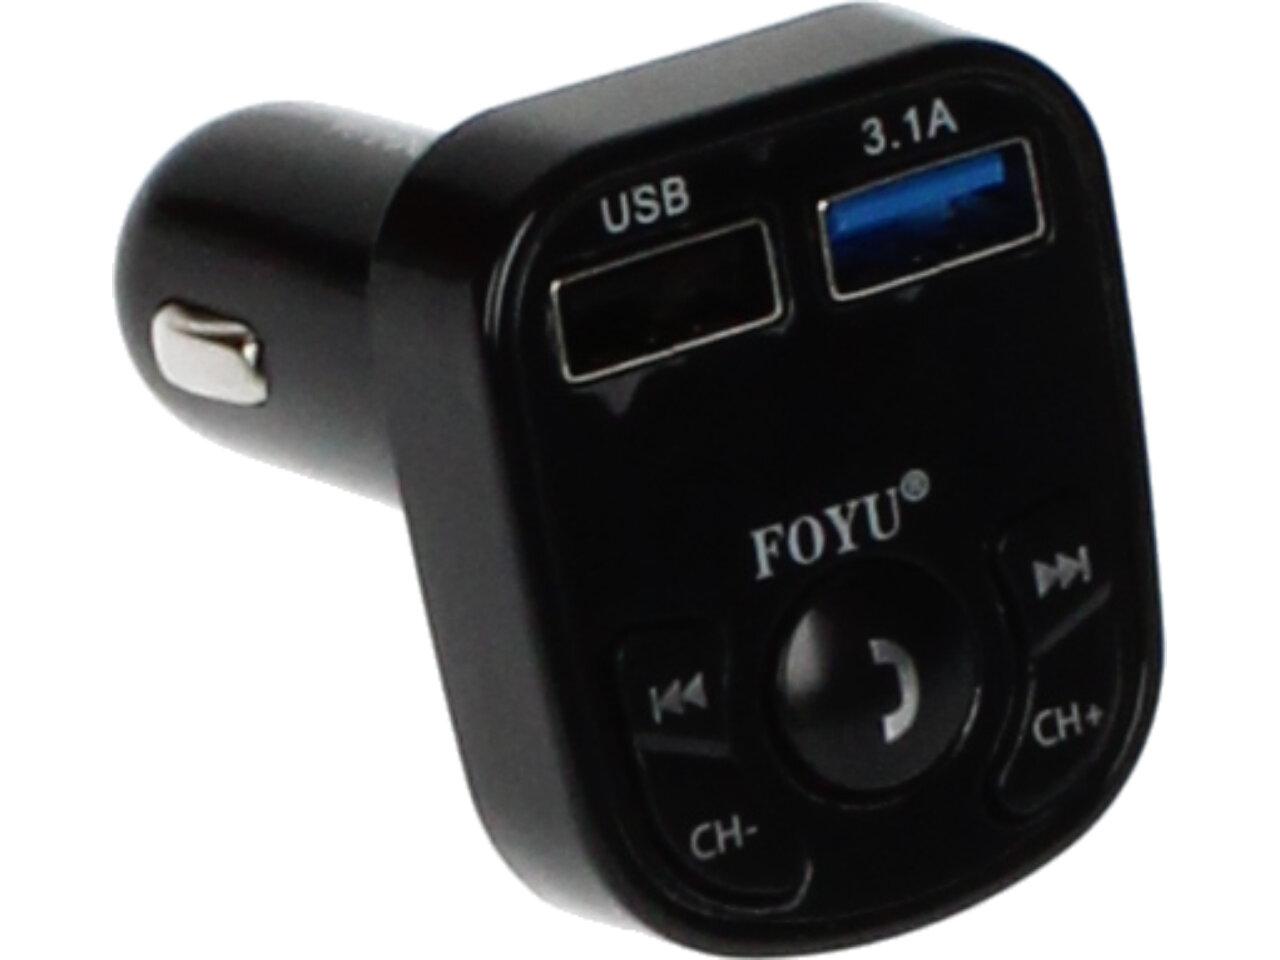 USB adaptér do autozapalovače s Hands-free Bluetooth FO-Q516